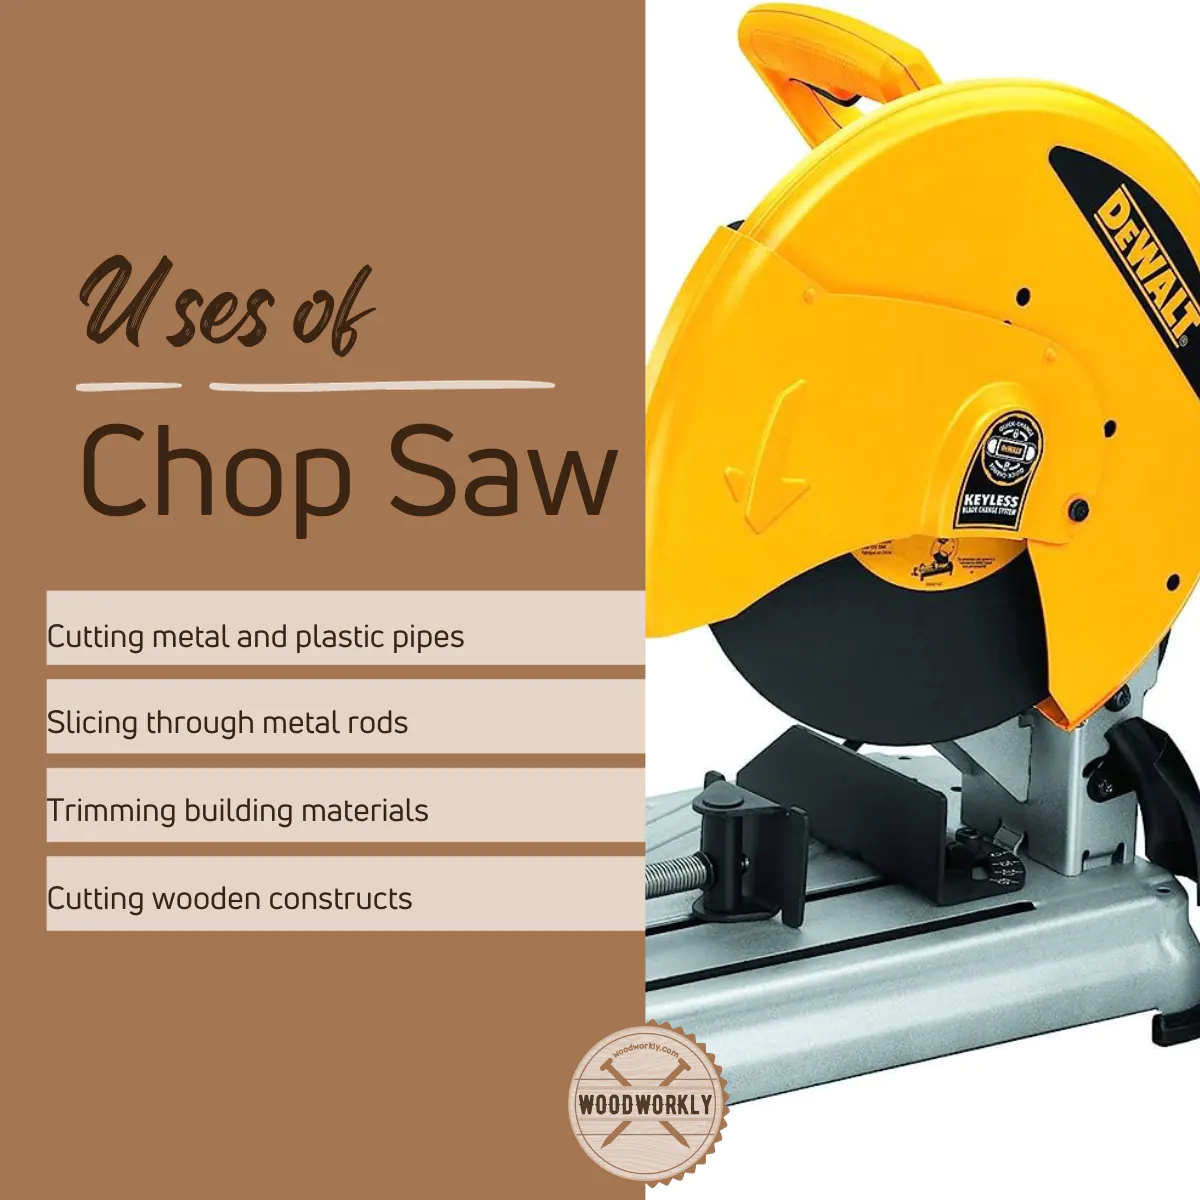 Uses of Chop saw